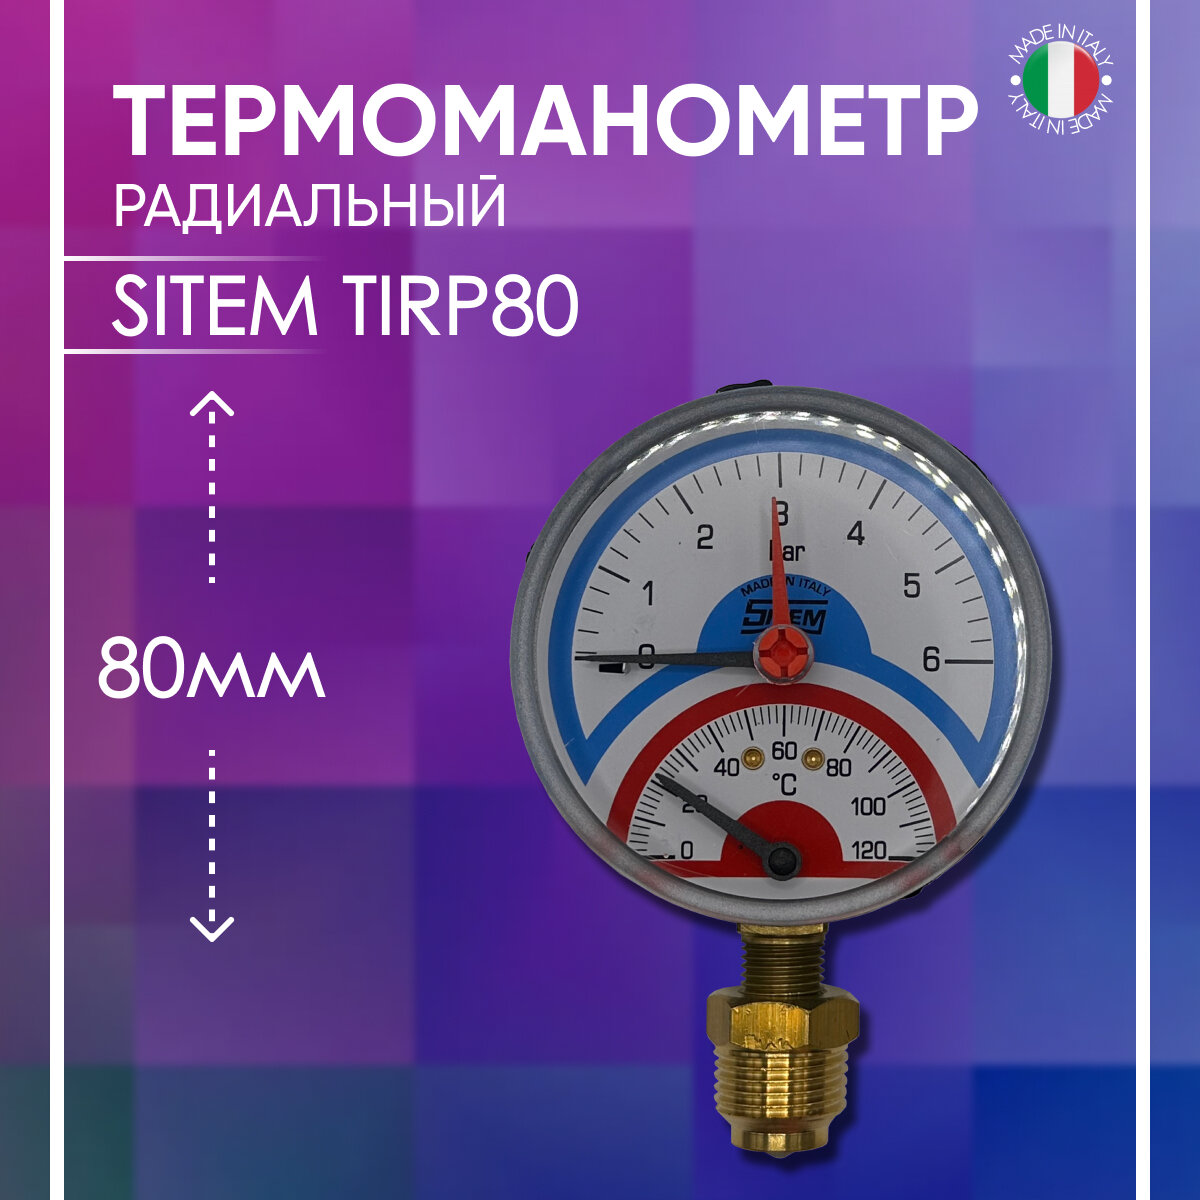 Термоманометр радиальный диаметр 80 мм SITEM артикул TIRP80 1/2